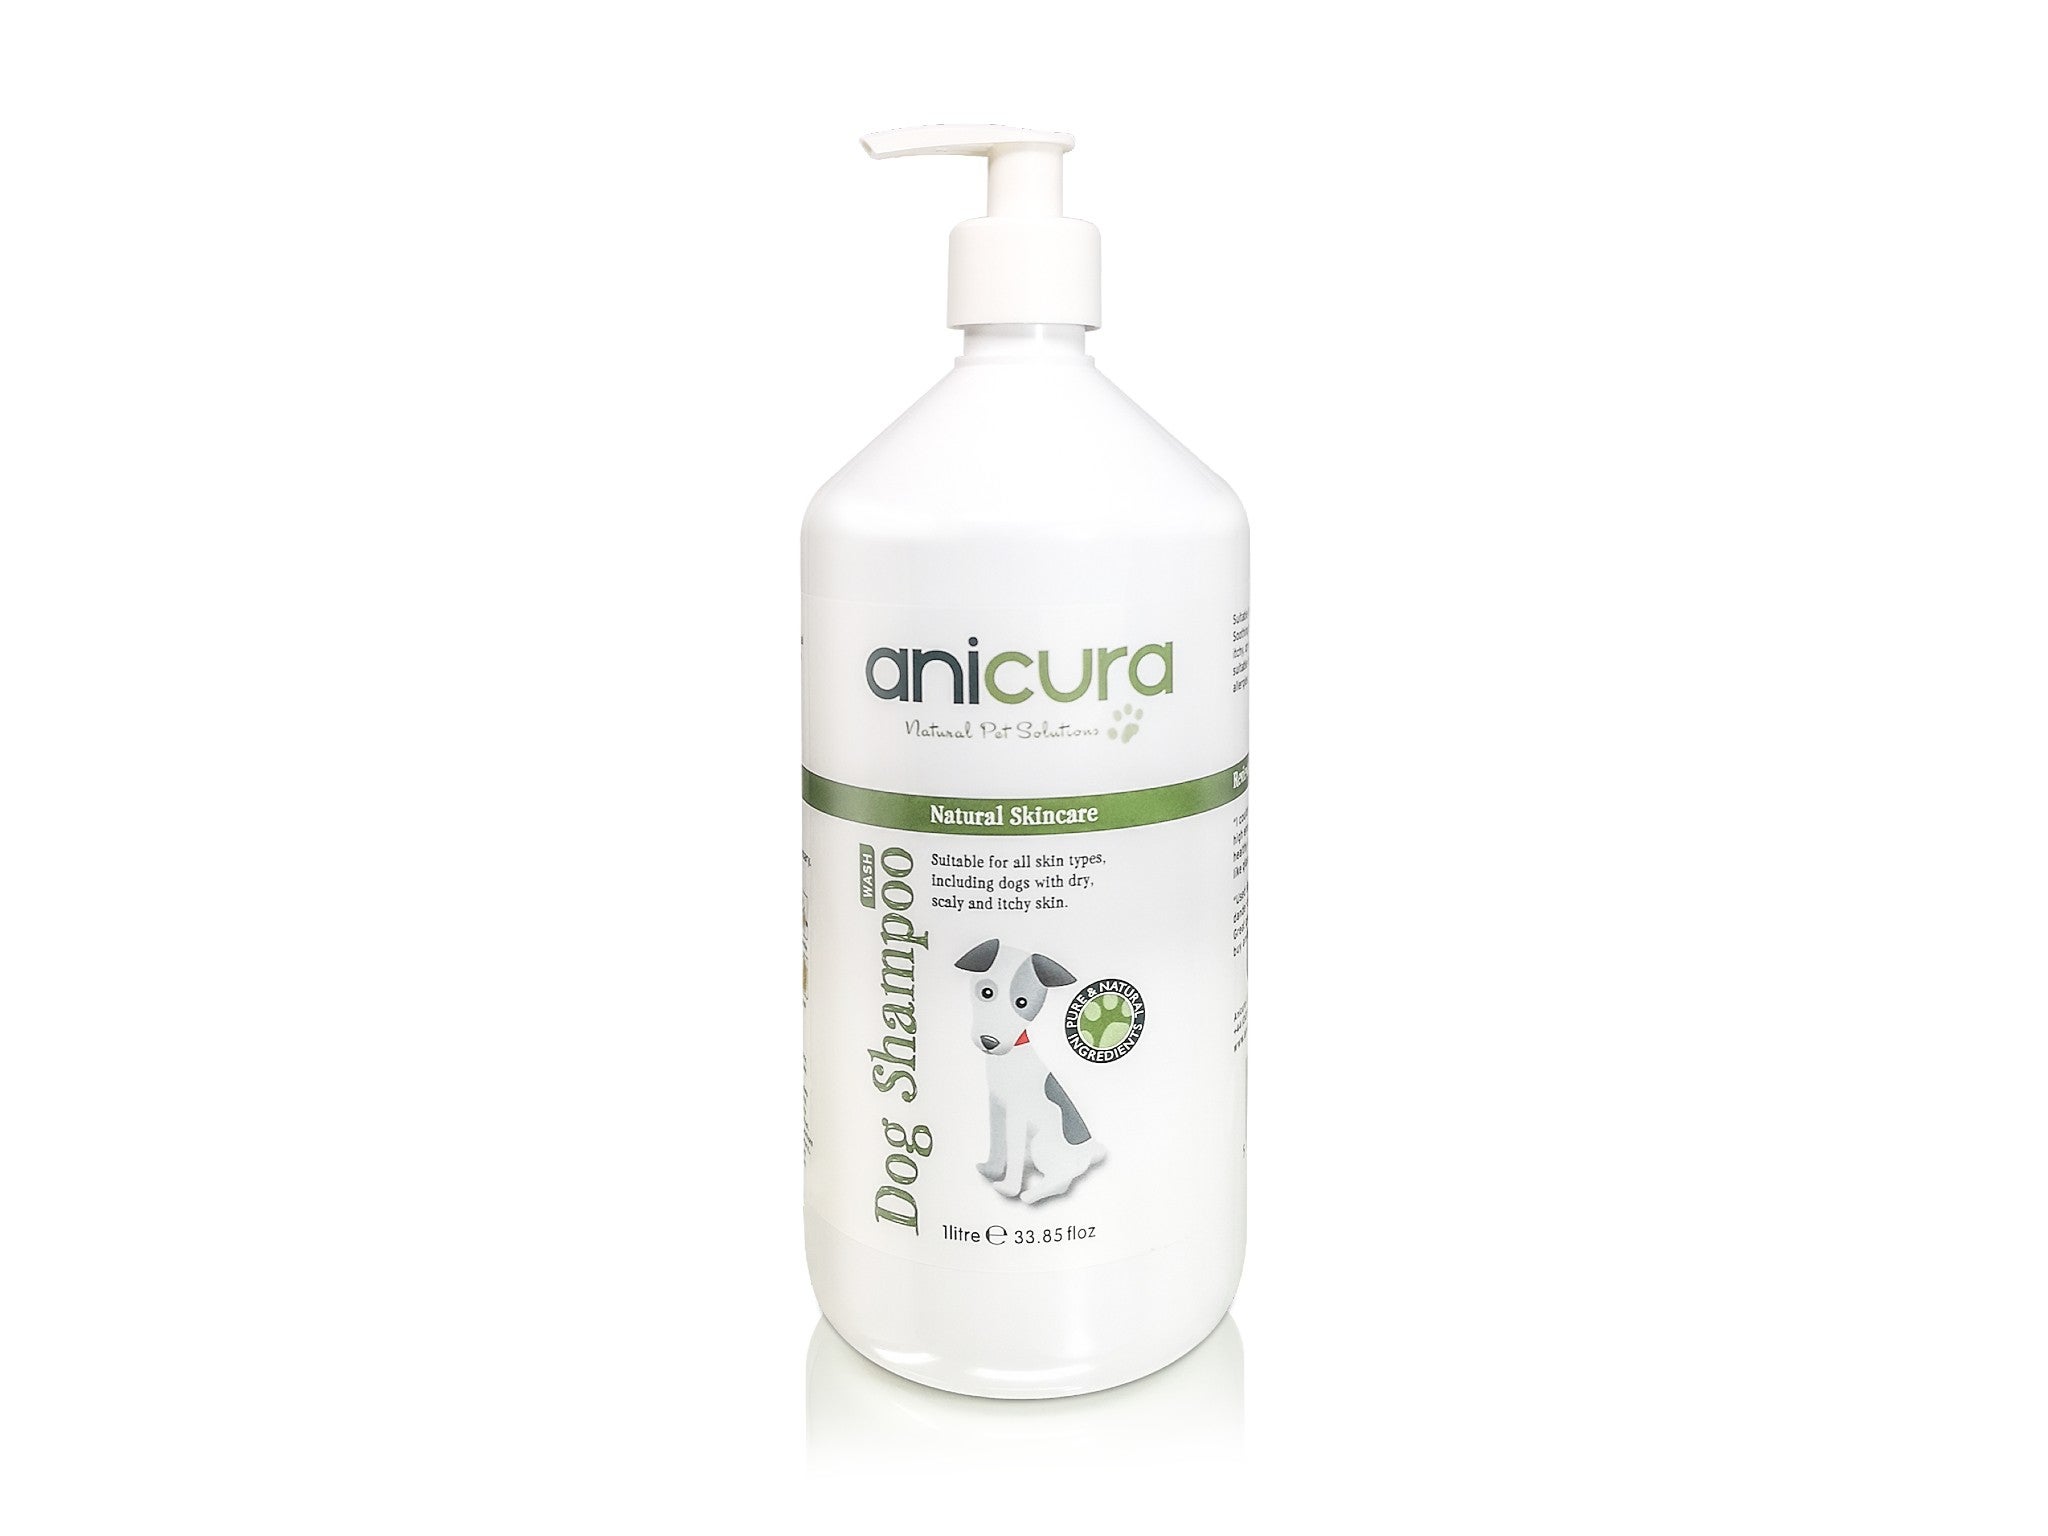 Anicura dog shampoo indybest.jpeg